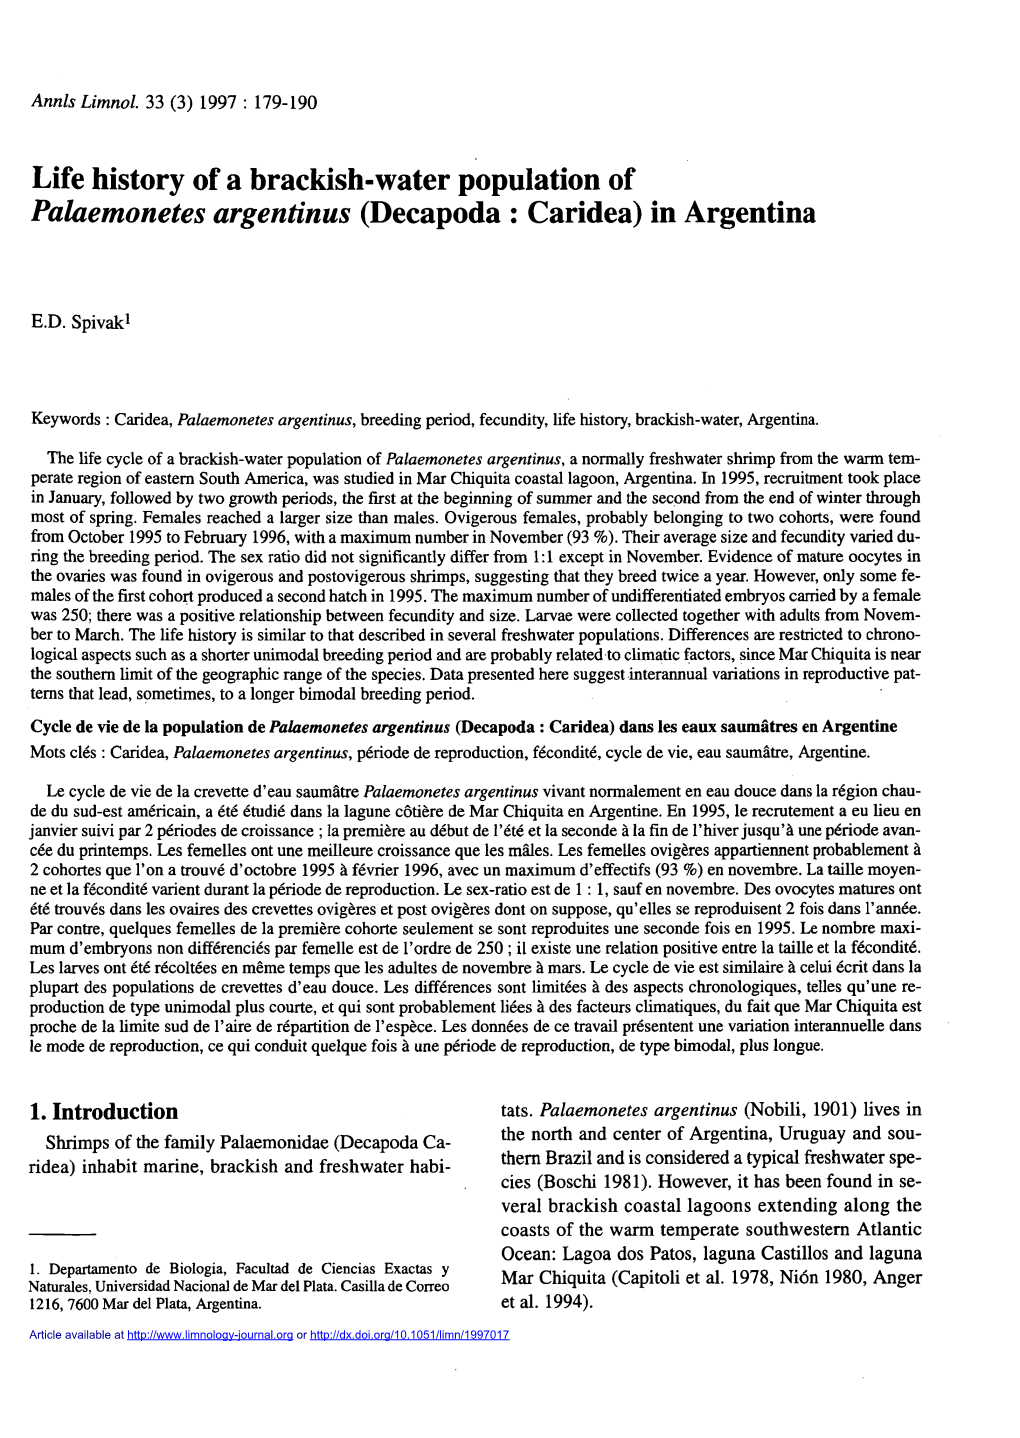 Life History of a Brackish-Water Population of Palaemonetes Argentinus (Decapoda : Caridea) in Argentina